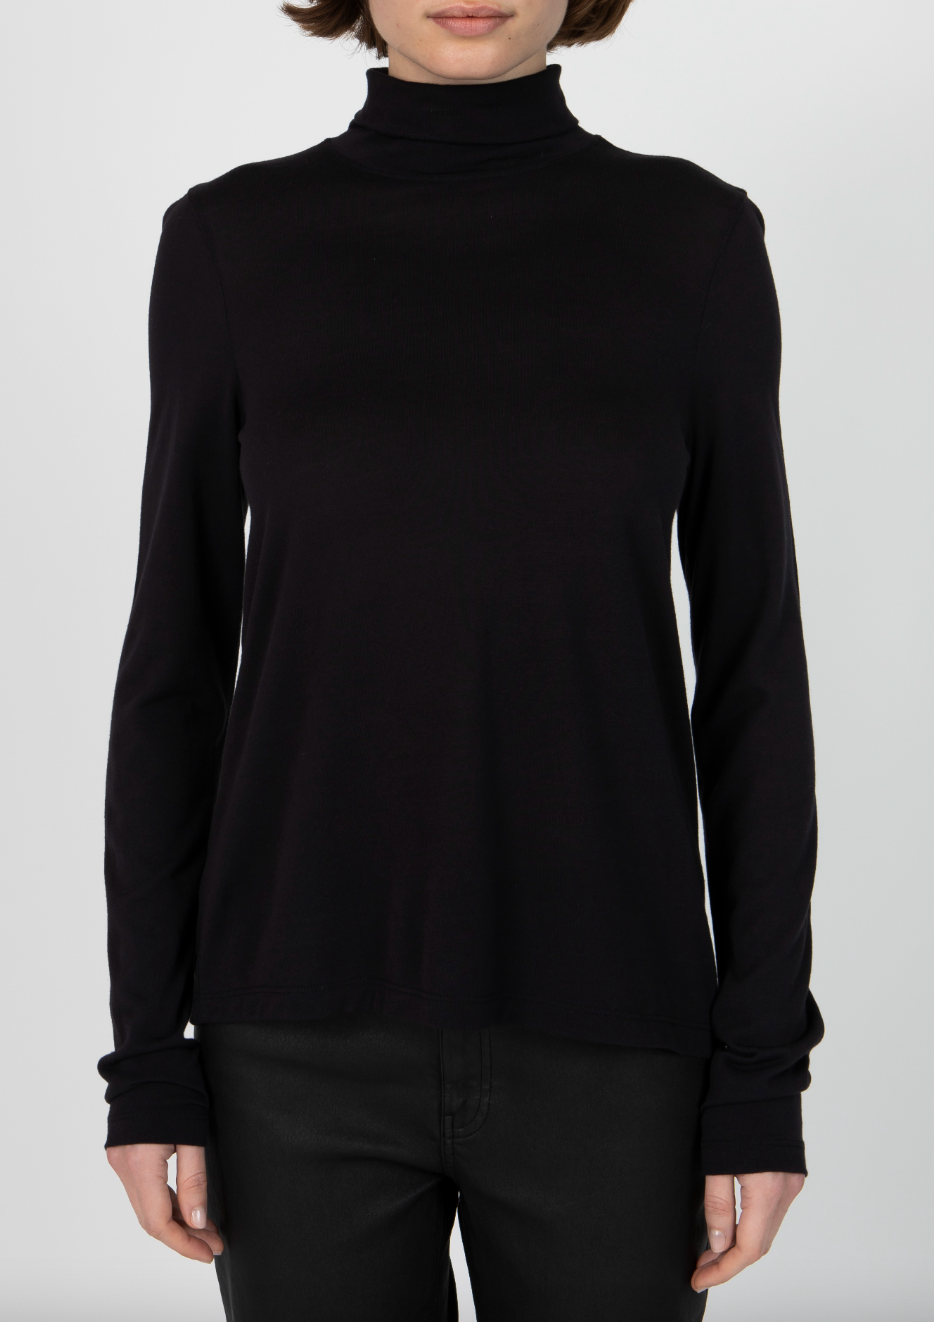 ATM Collection - Women - Black Heavy Modal Jersey Long Sleeve Turtleneck Top